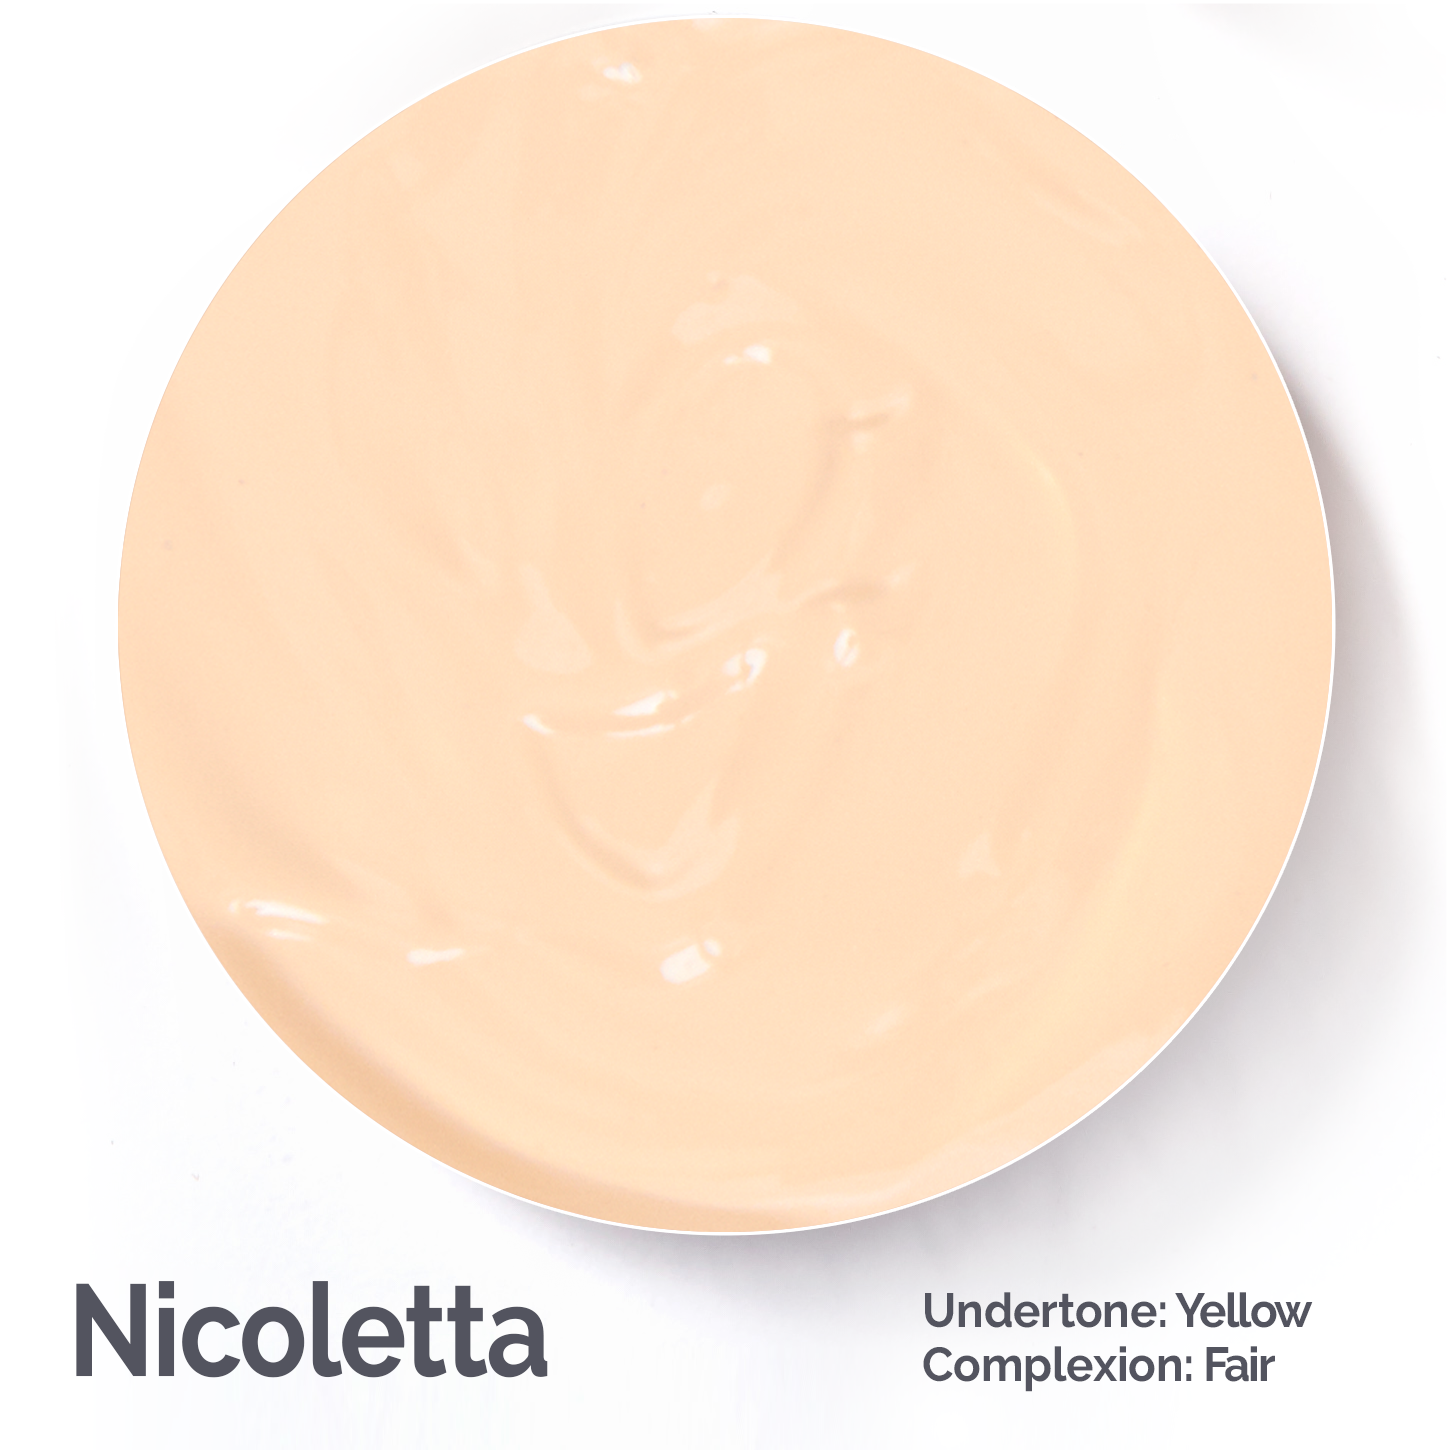 Nicoletta color swatch #nicoletta